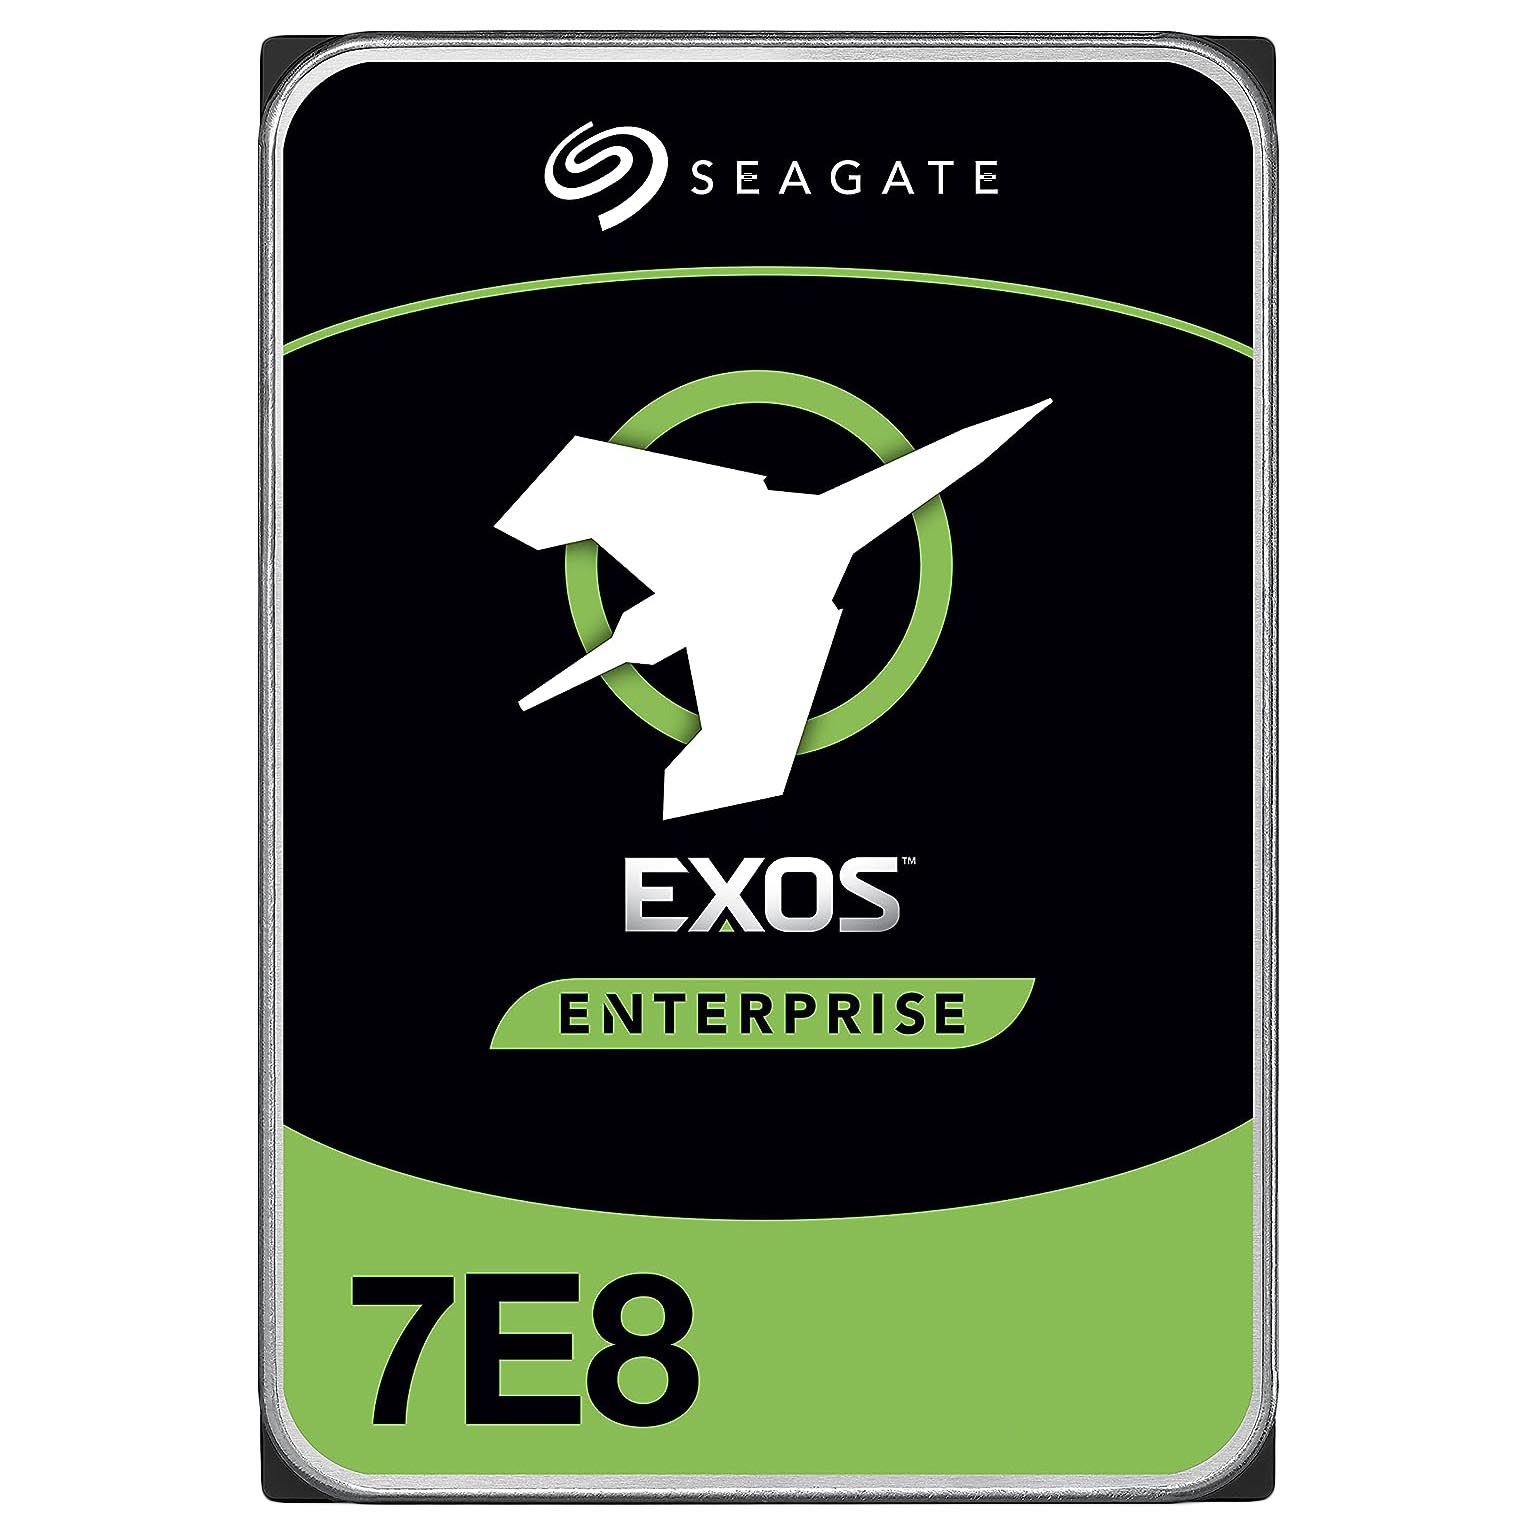 Внутренний жесткий диск Seagate Exos 7E8 512n, ST4000NM0035, 4 Тб внутренний жесткий диск seagate exos 7e8 512n st4000nm0035 4 тб